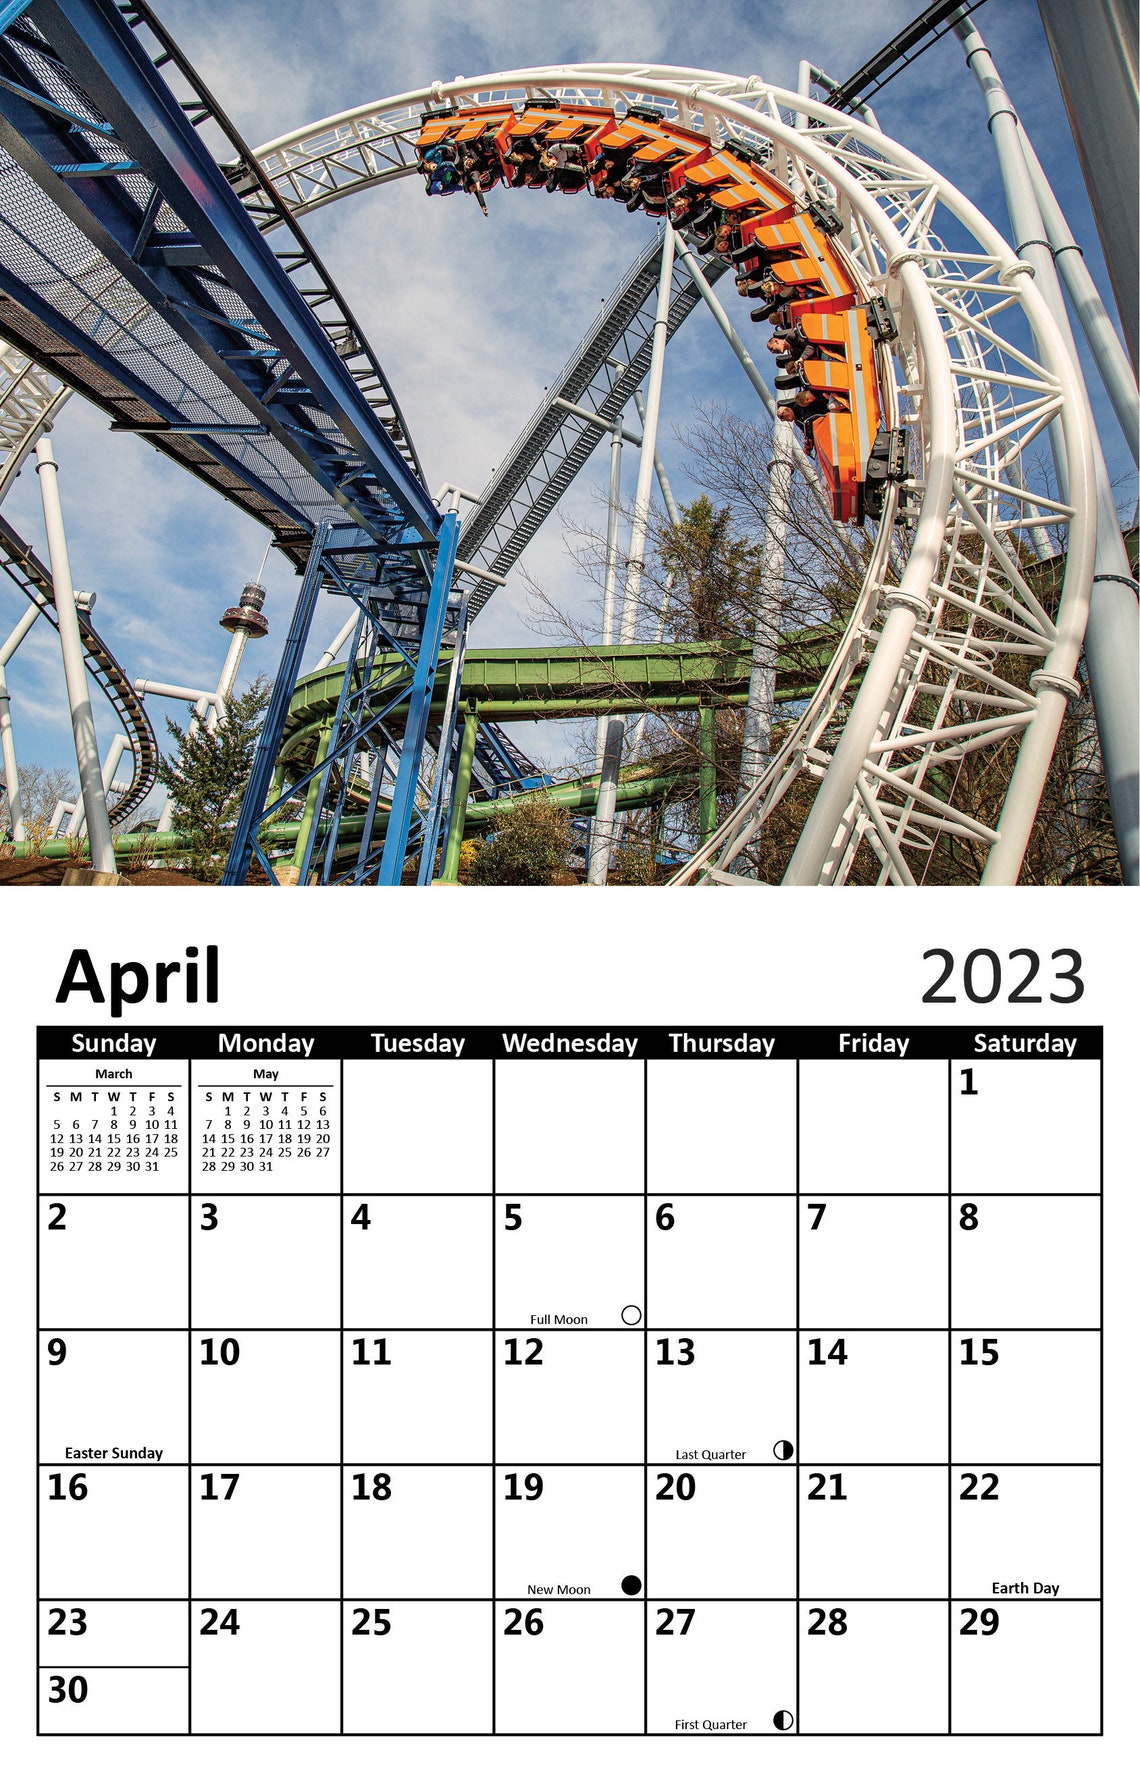 2023 Hersheypark Images Calendar Etsy